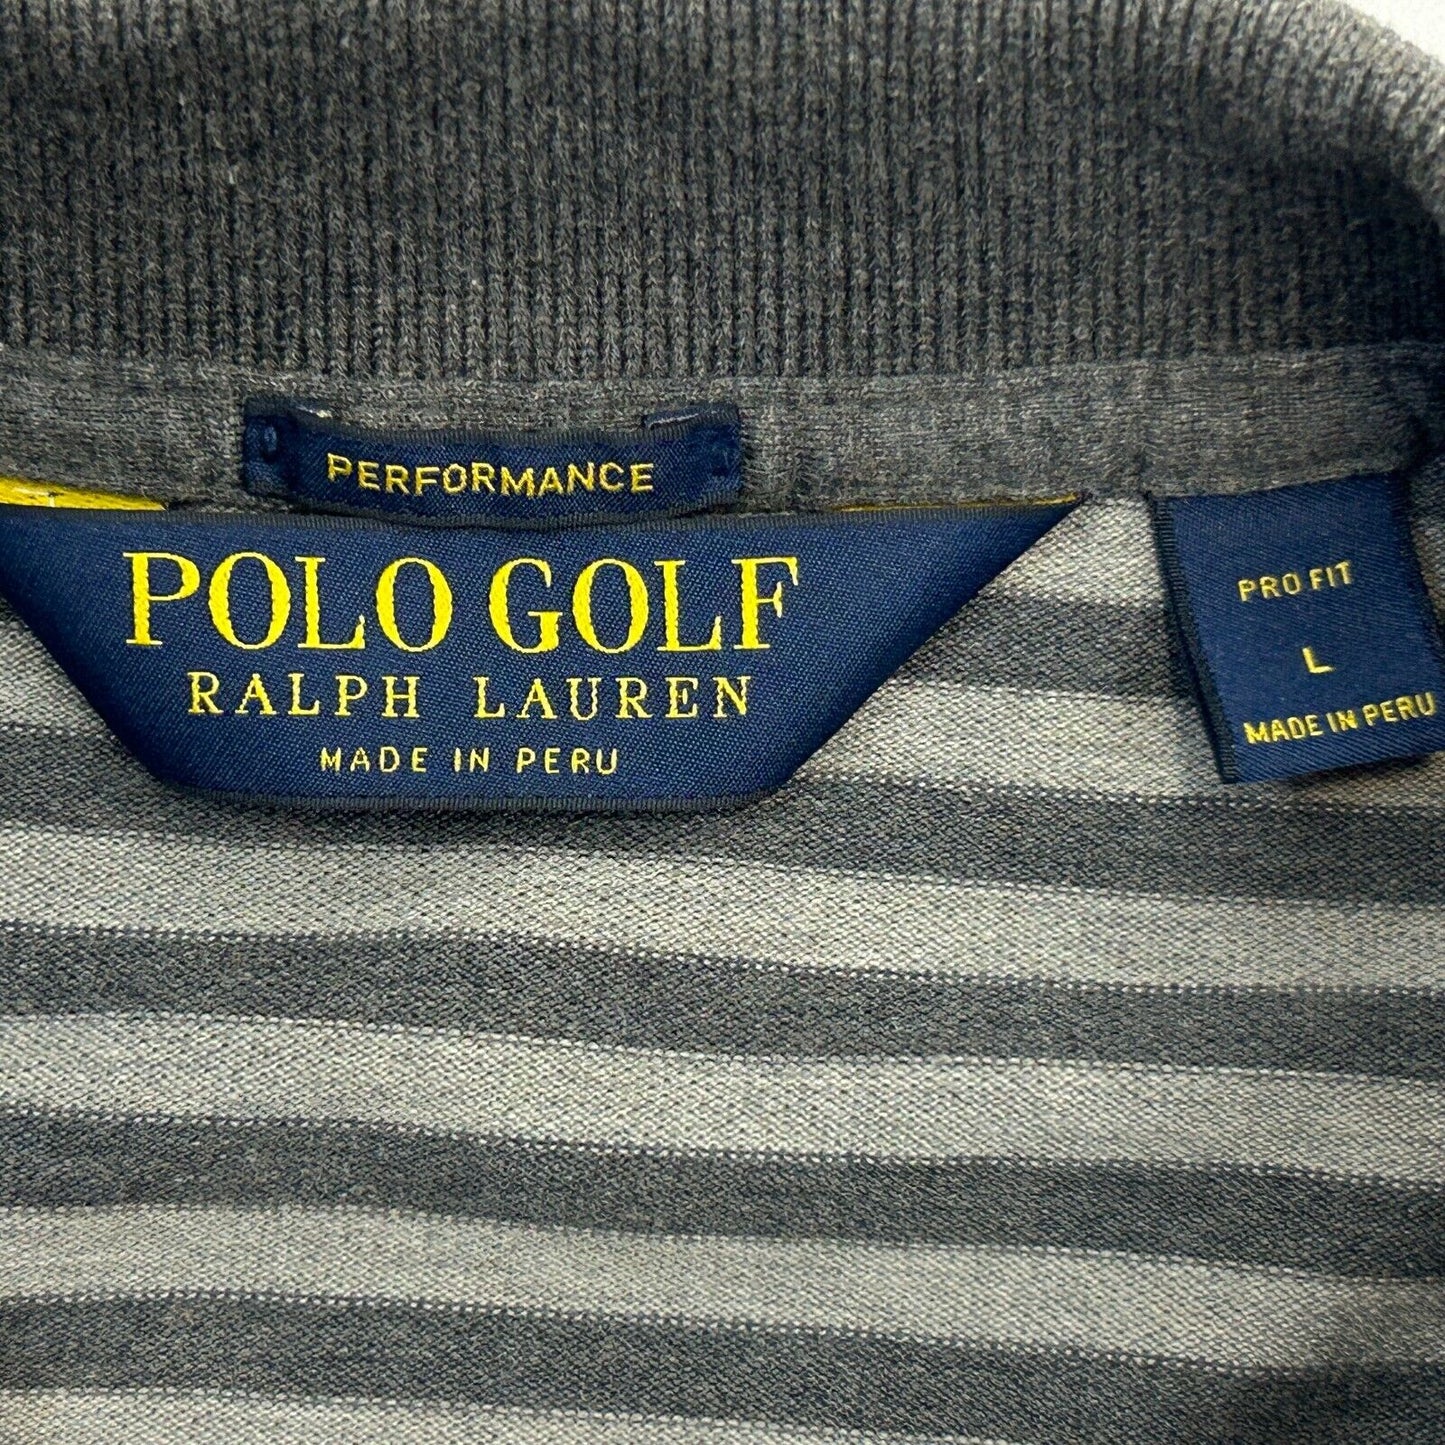 Polo Golf Ralph Lauren Polo T Shirt Large Gray Striped Big Pony Logo Golfer Mens